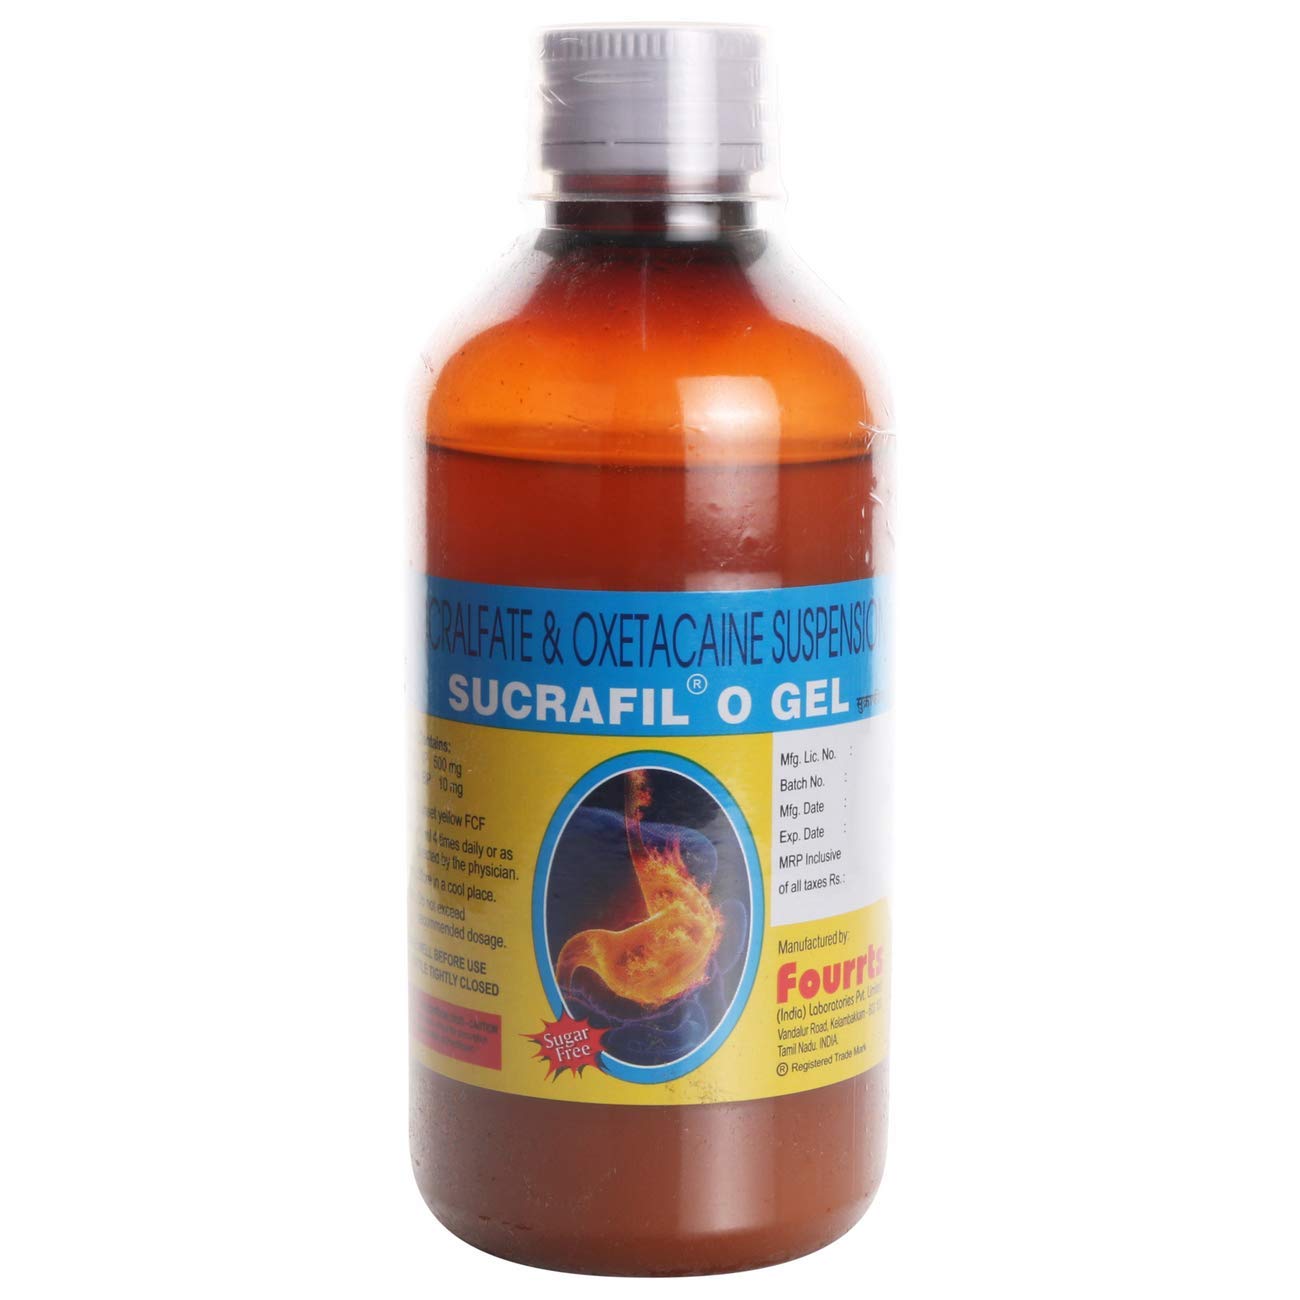 Sucrafil O Gel Syrup 200ml - Sucralfate & Oxetacaine Suspension -  Fourrts - Medizzo.com